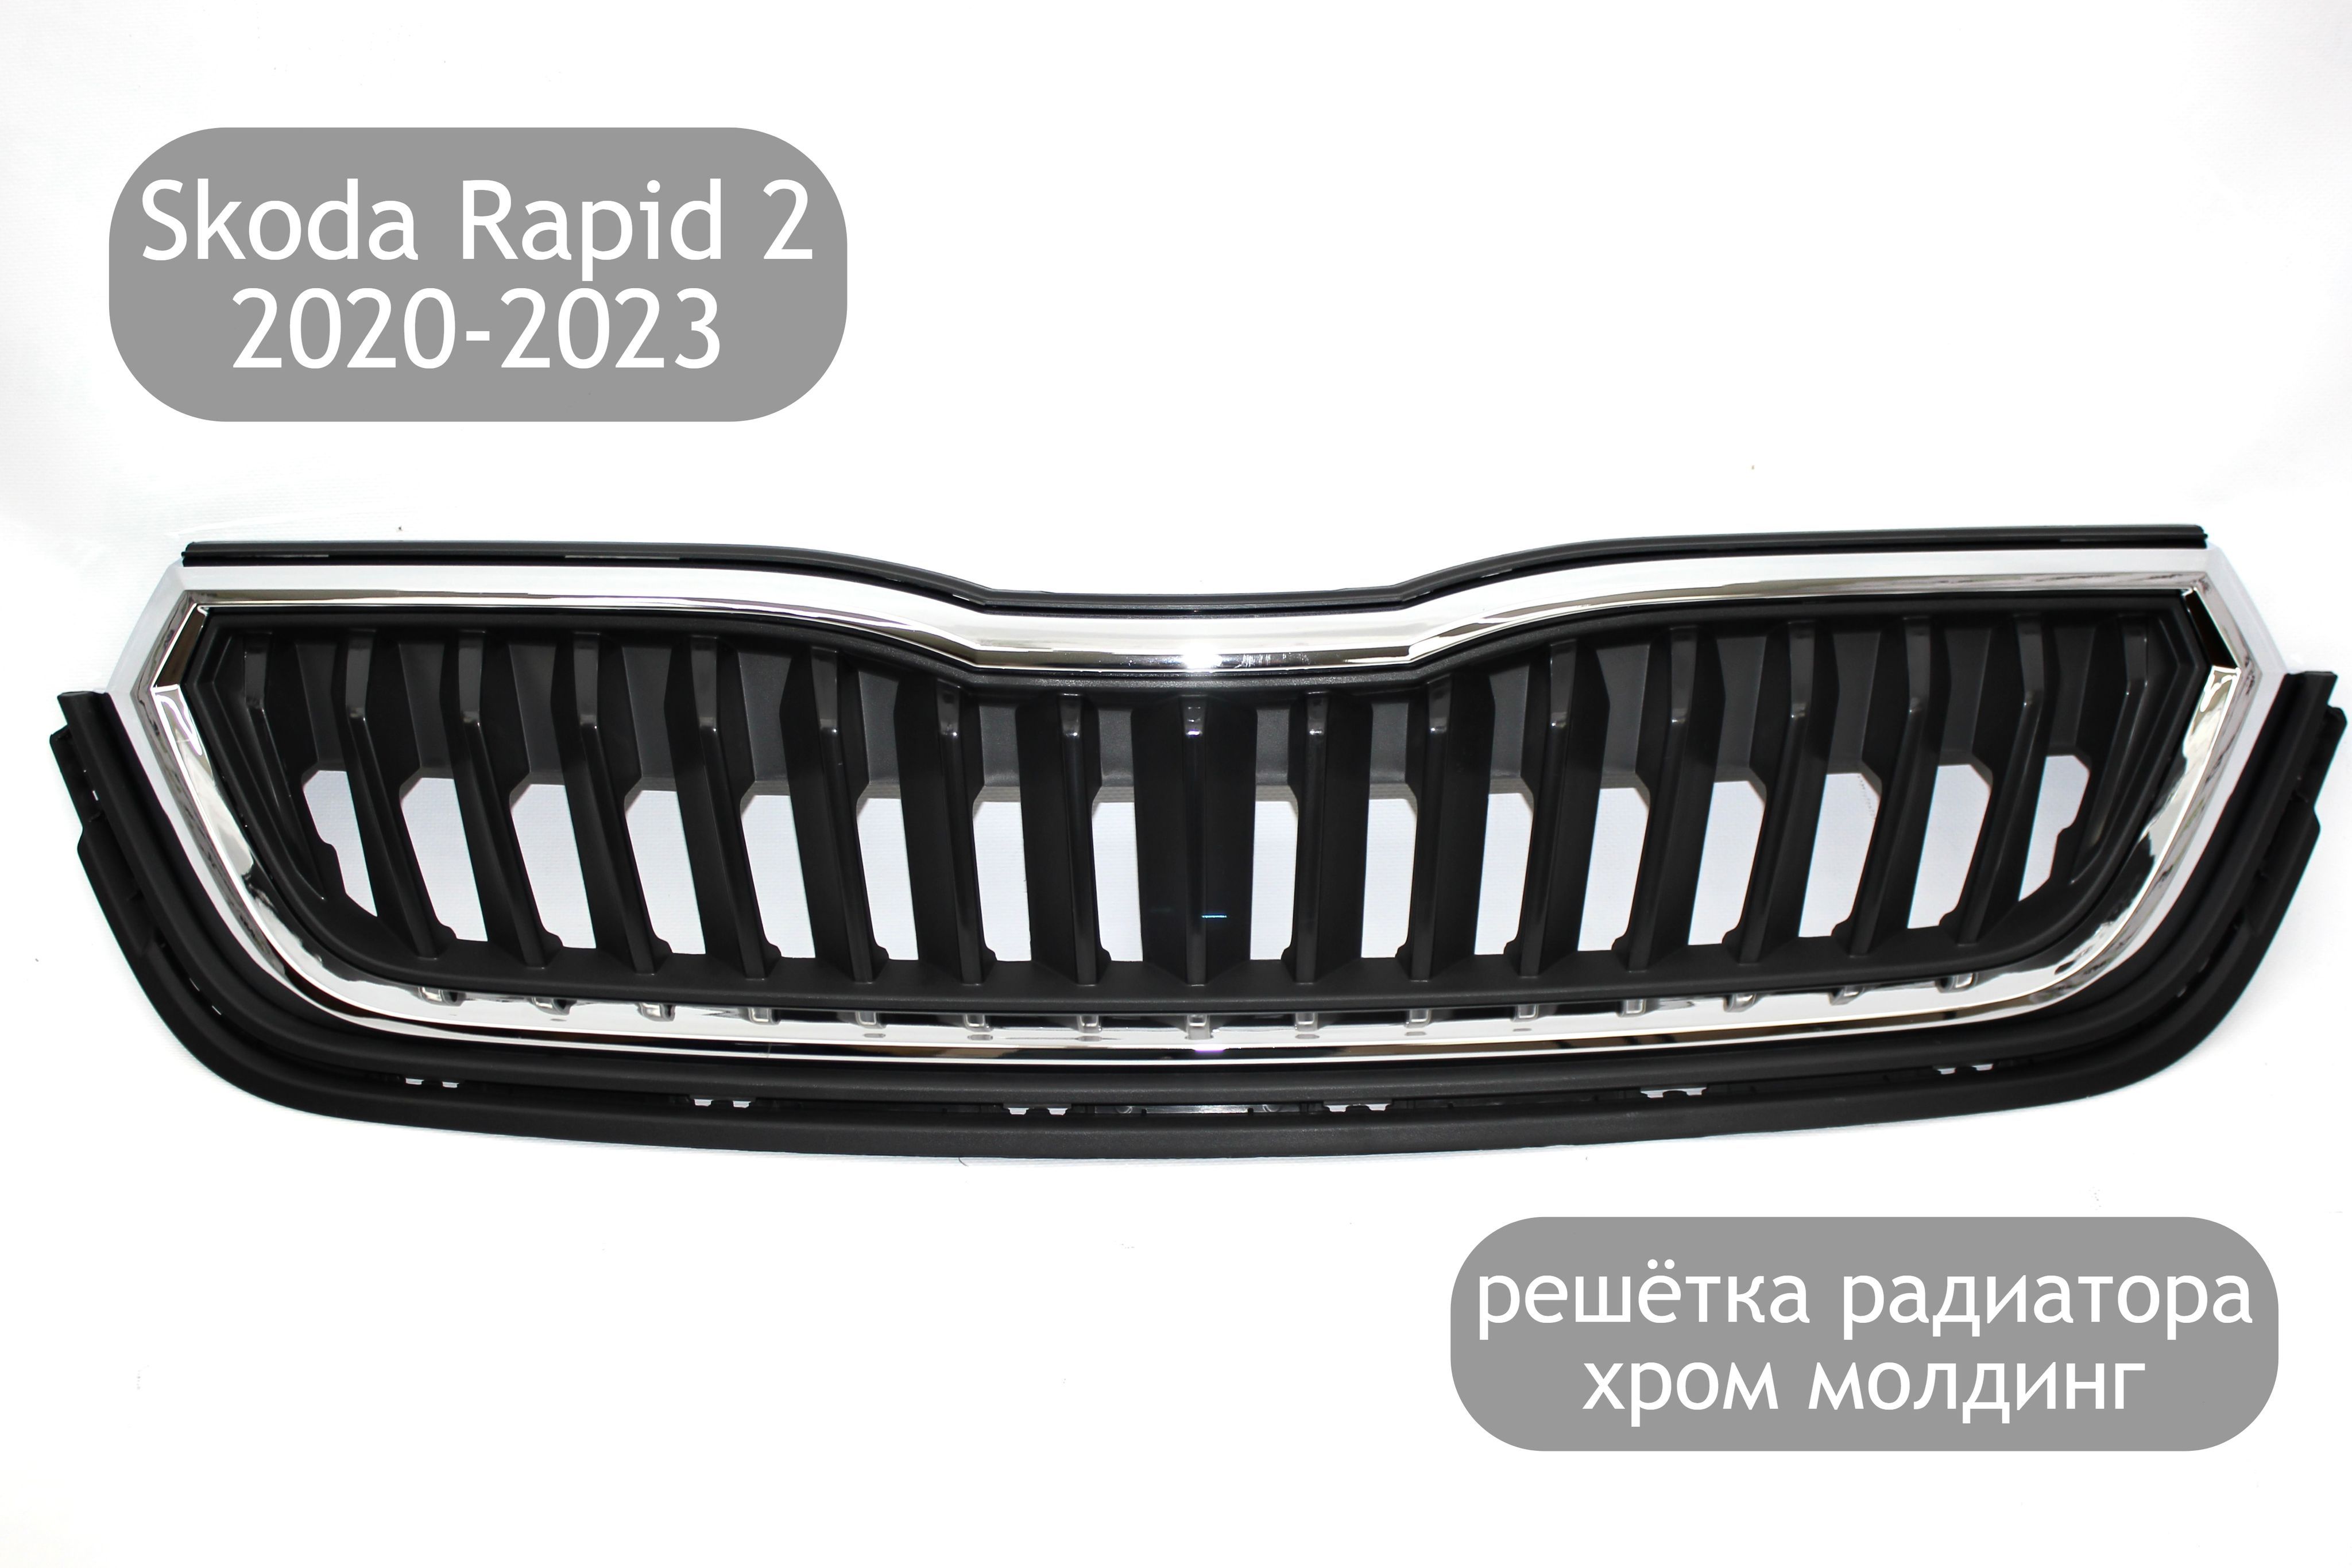     Skoda Rapid 2 2020-2023 -  60U8536689B9 -       - OZON 901613526